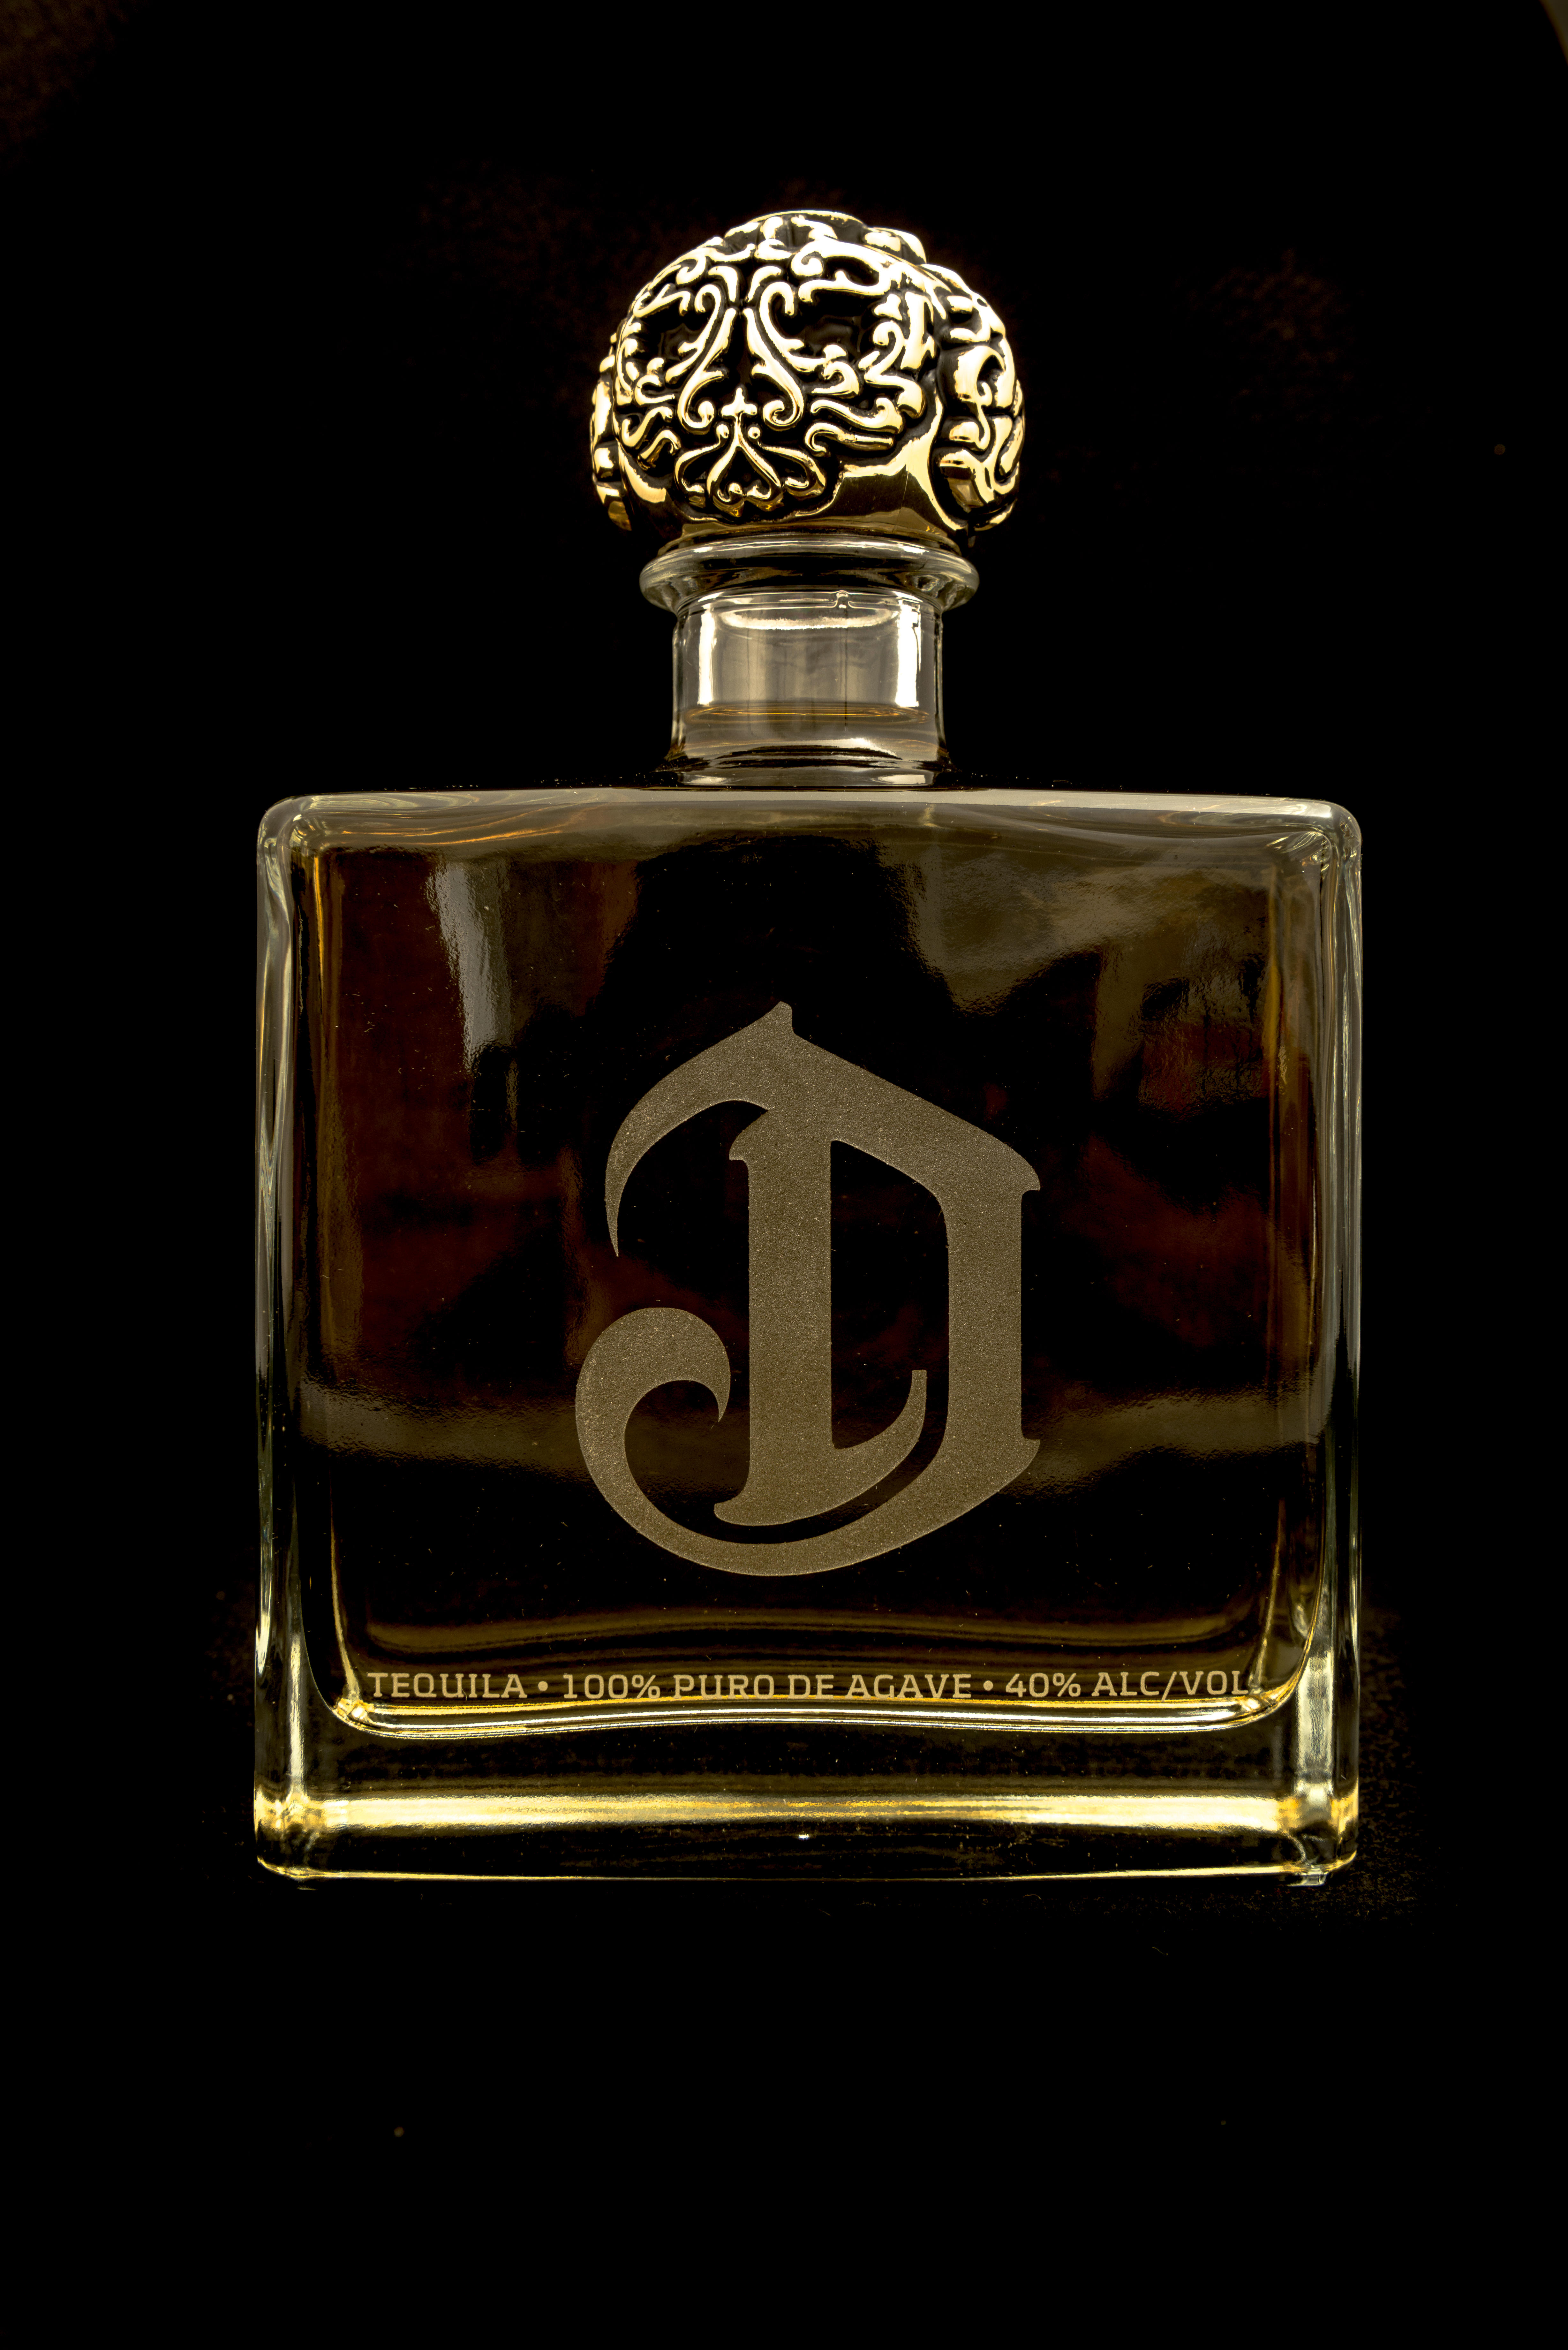 A bottle of Deleon tequila 